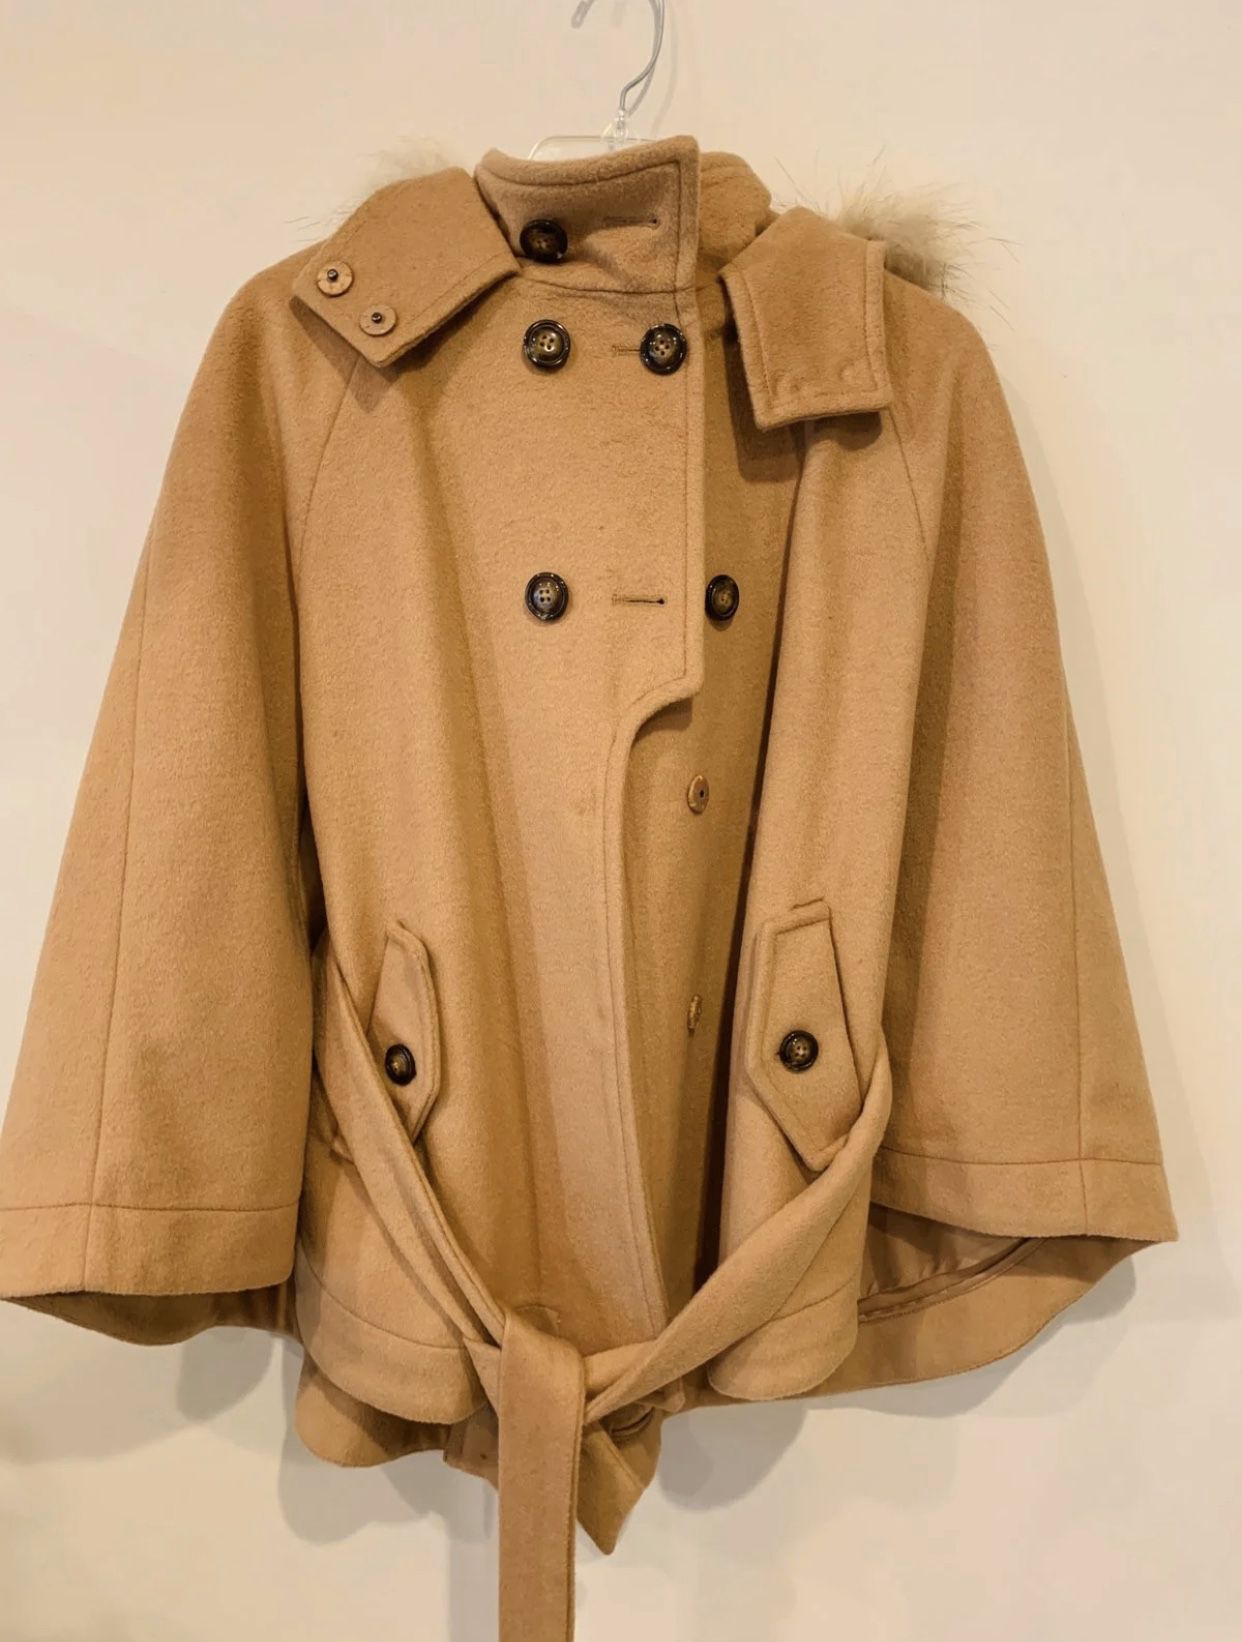 NWT Tan brown khaki pea cape shawl coat jacket